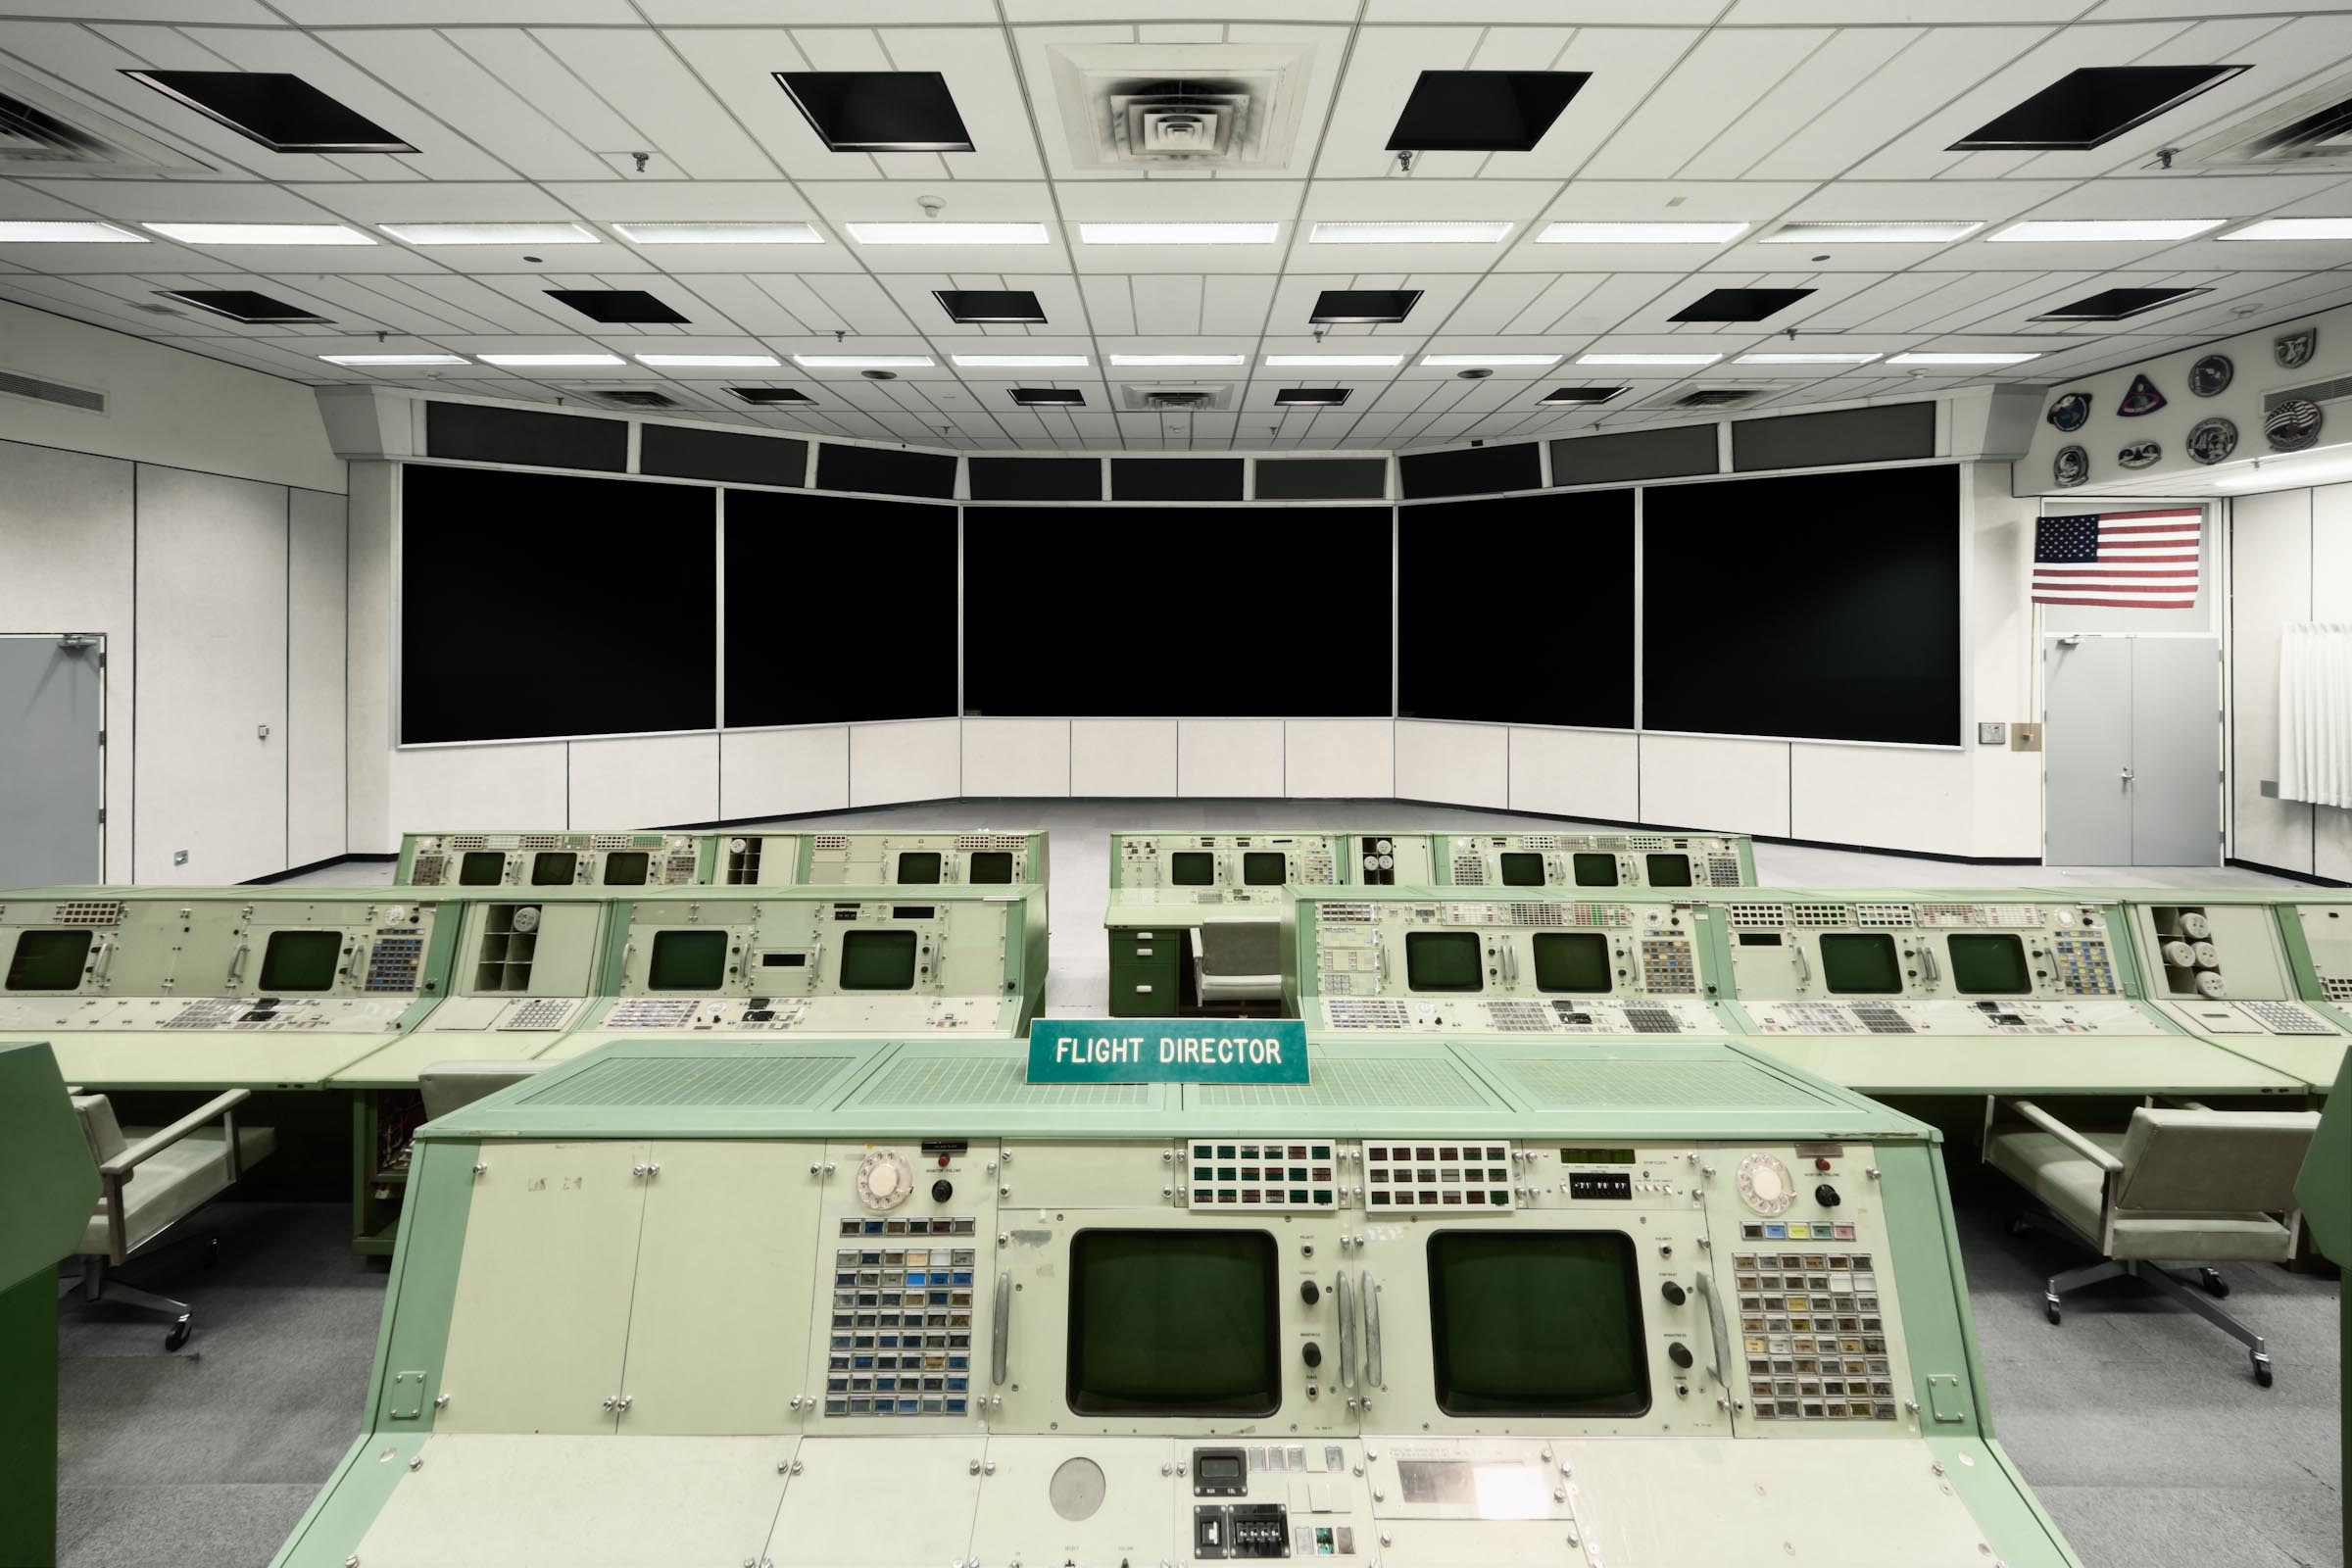 Mission Control - Johnson Space Center